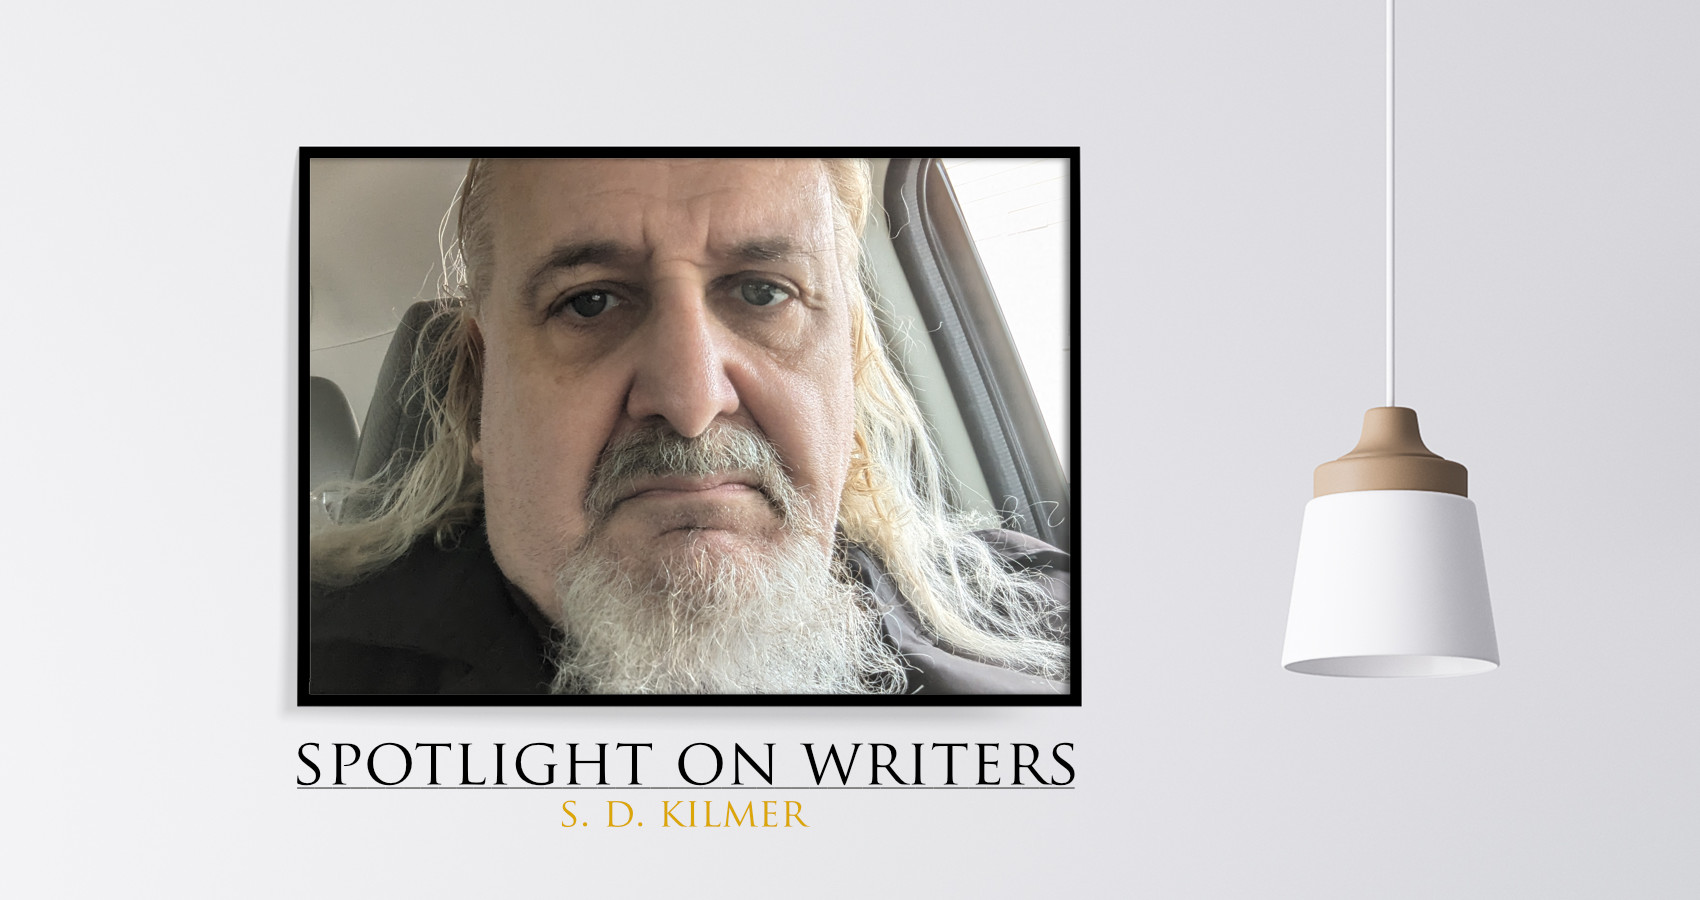 Spotlight On Writers - S.D. Kilmer, interview at Spillwords.com